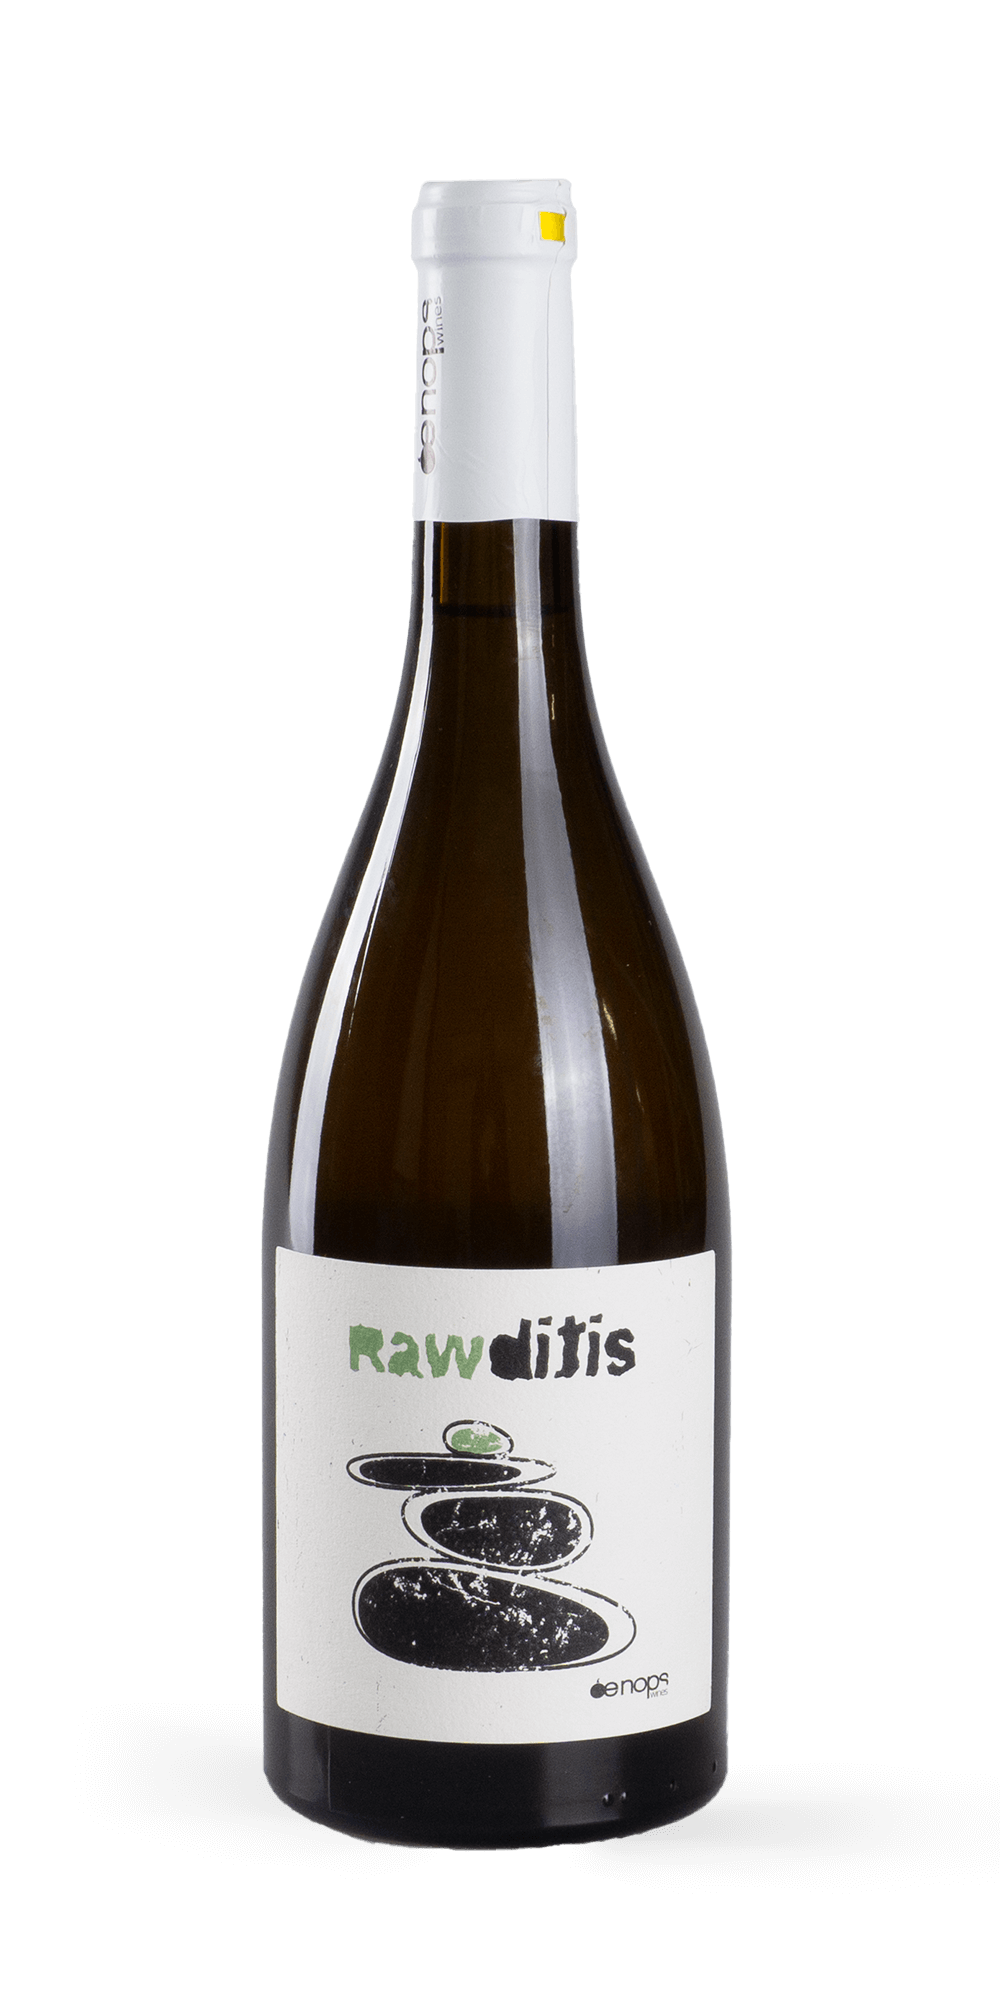 Rawditis 2020 - Oenops Wines